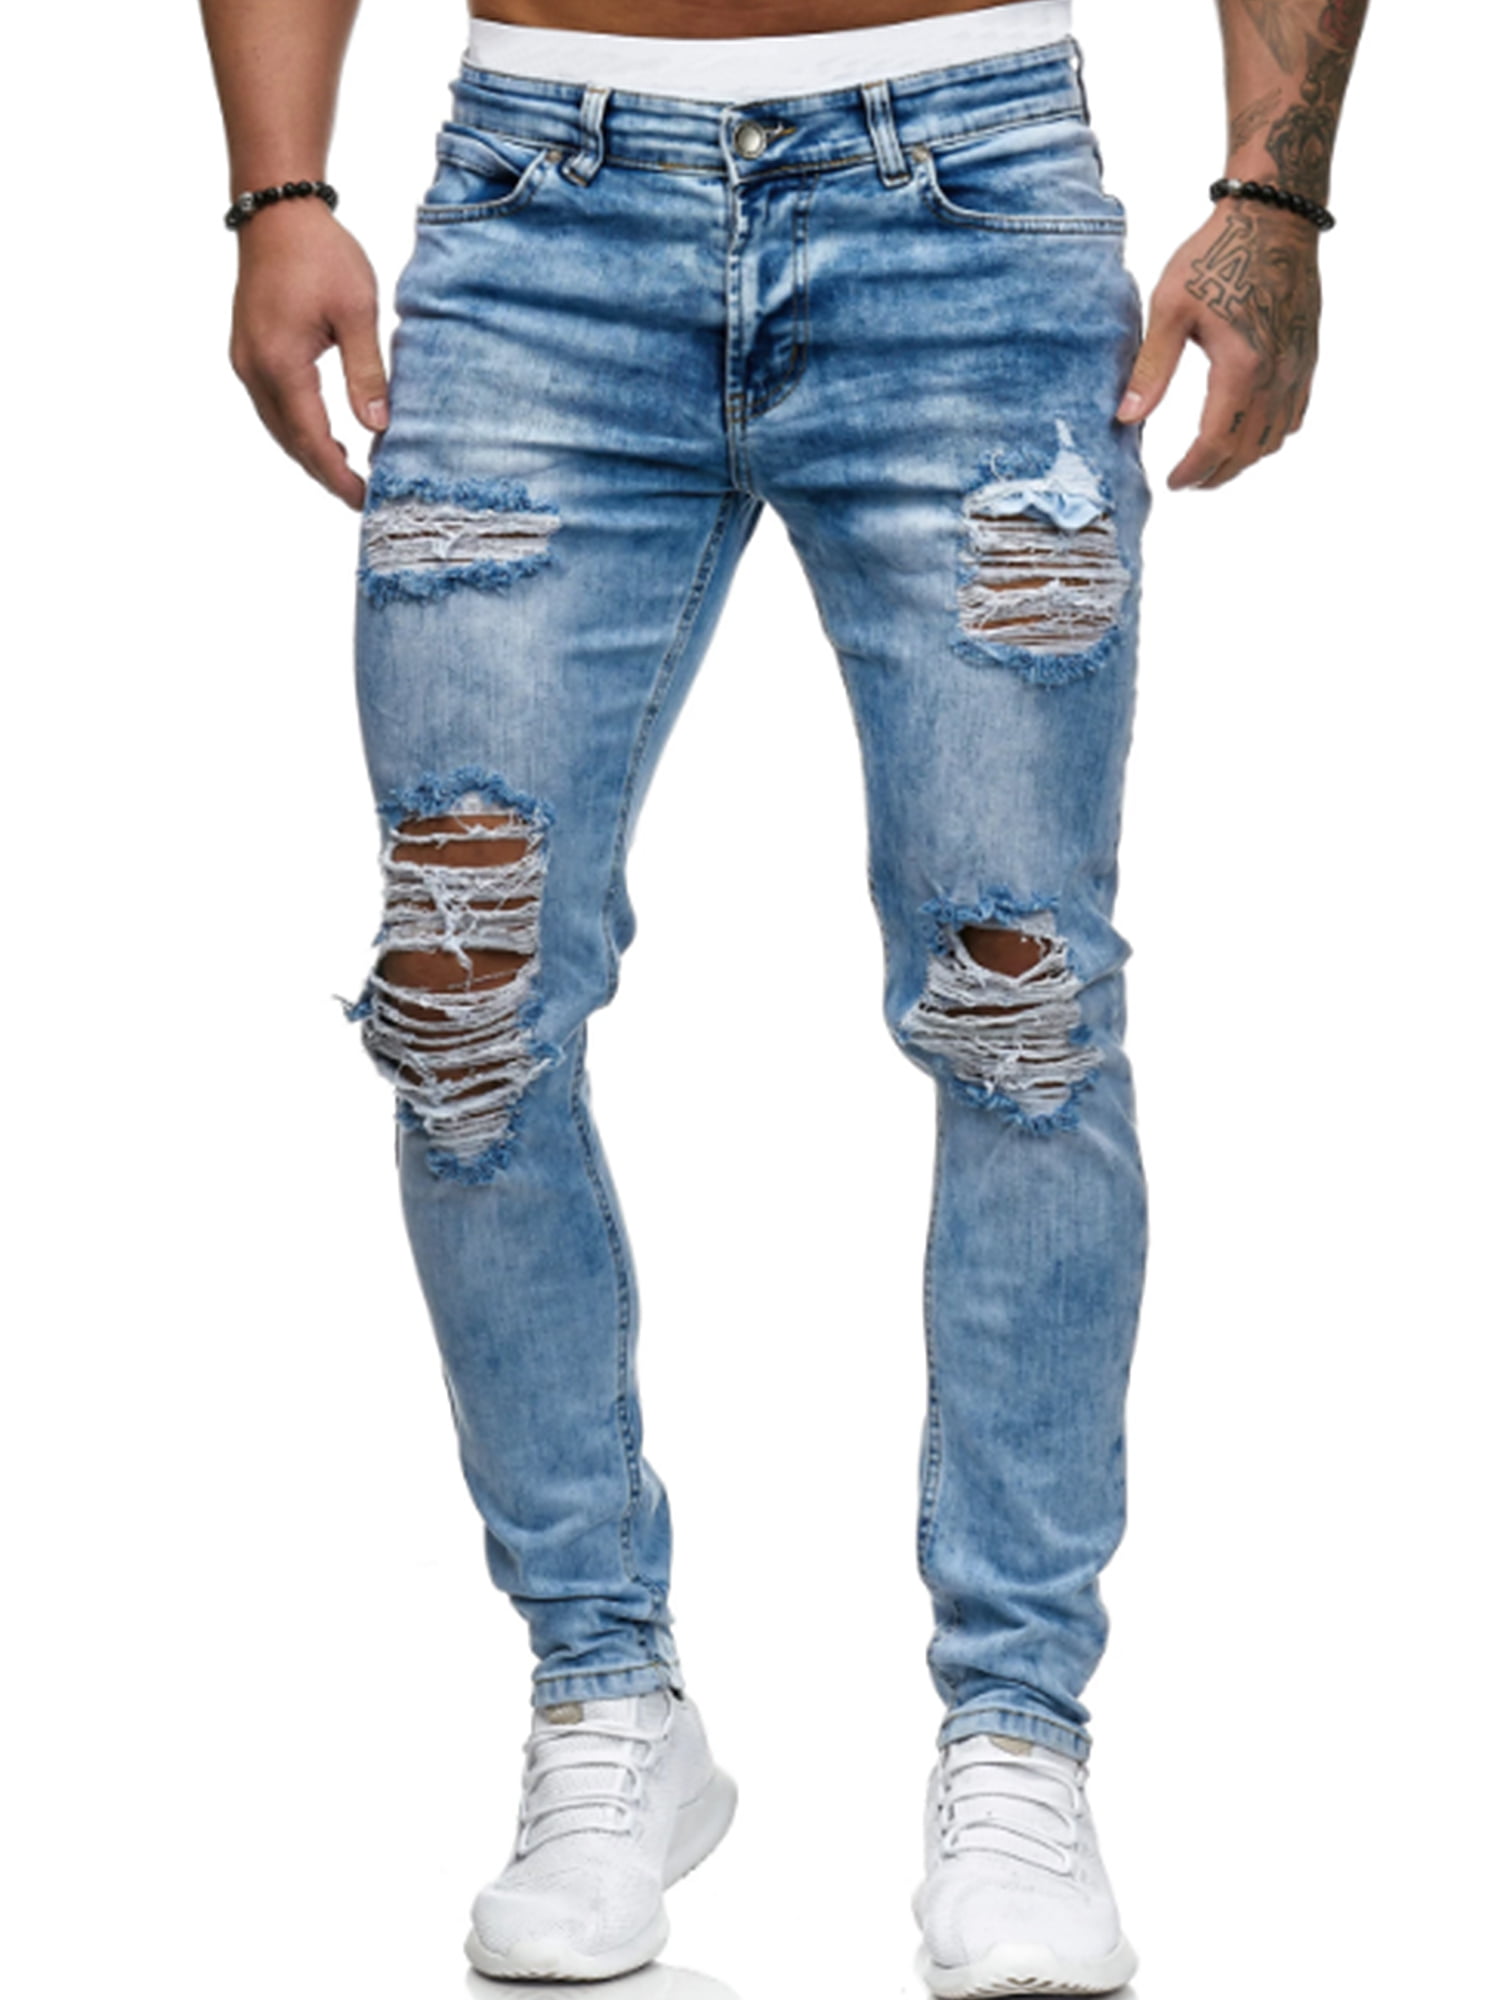 US Mens Hole Skinny Super Stretch Fit Ripped Denim Jeans All Waist Blue Black 